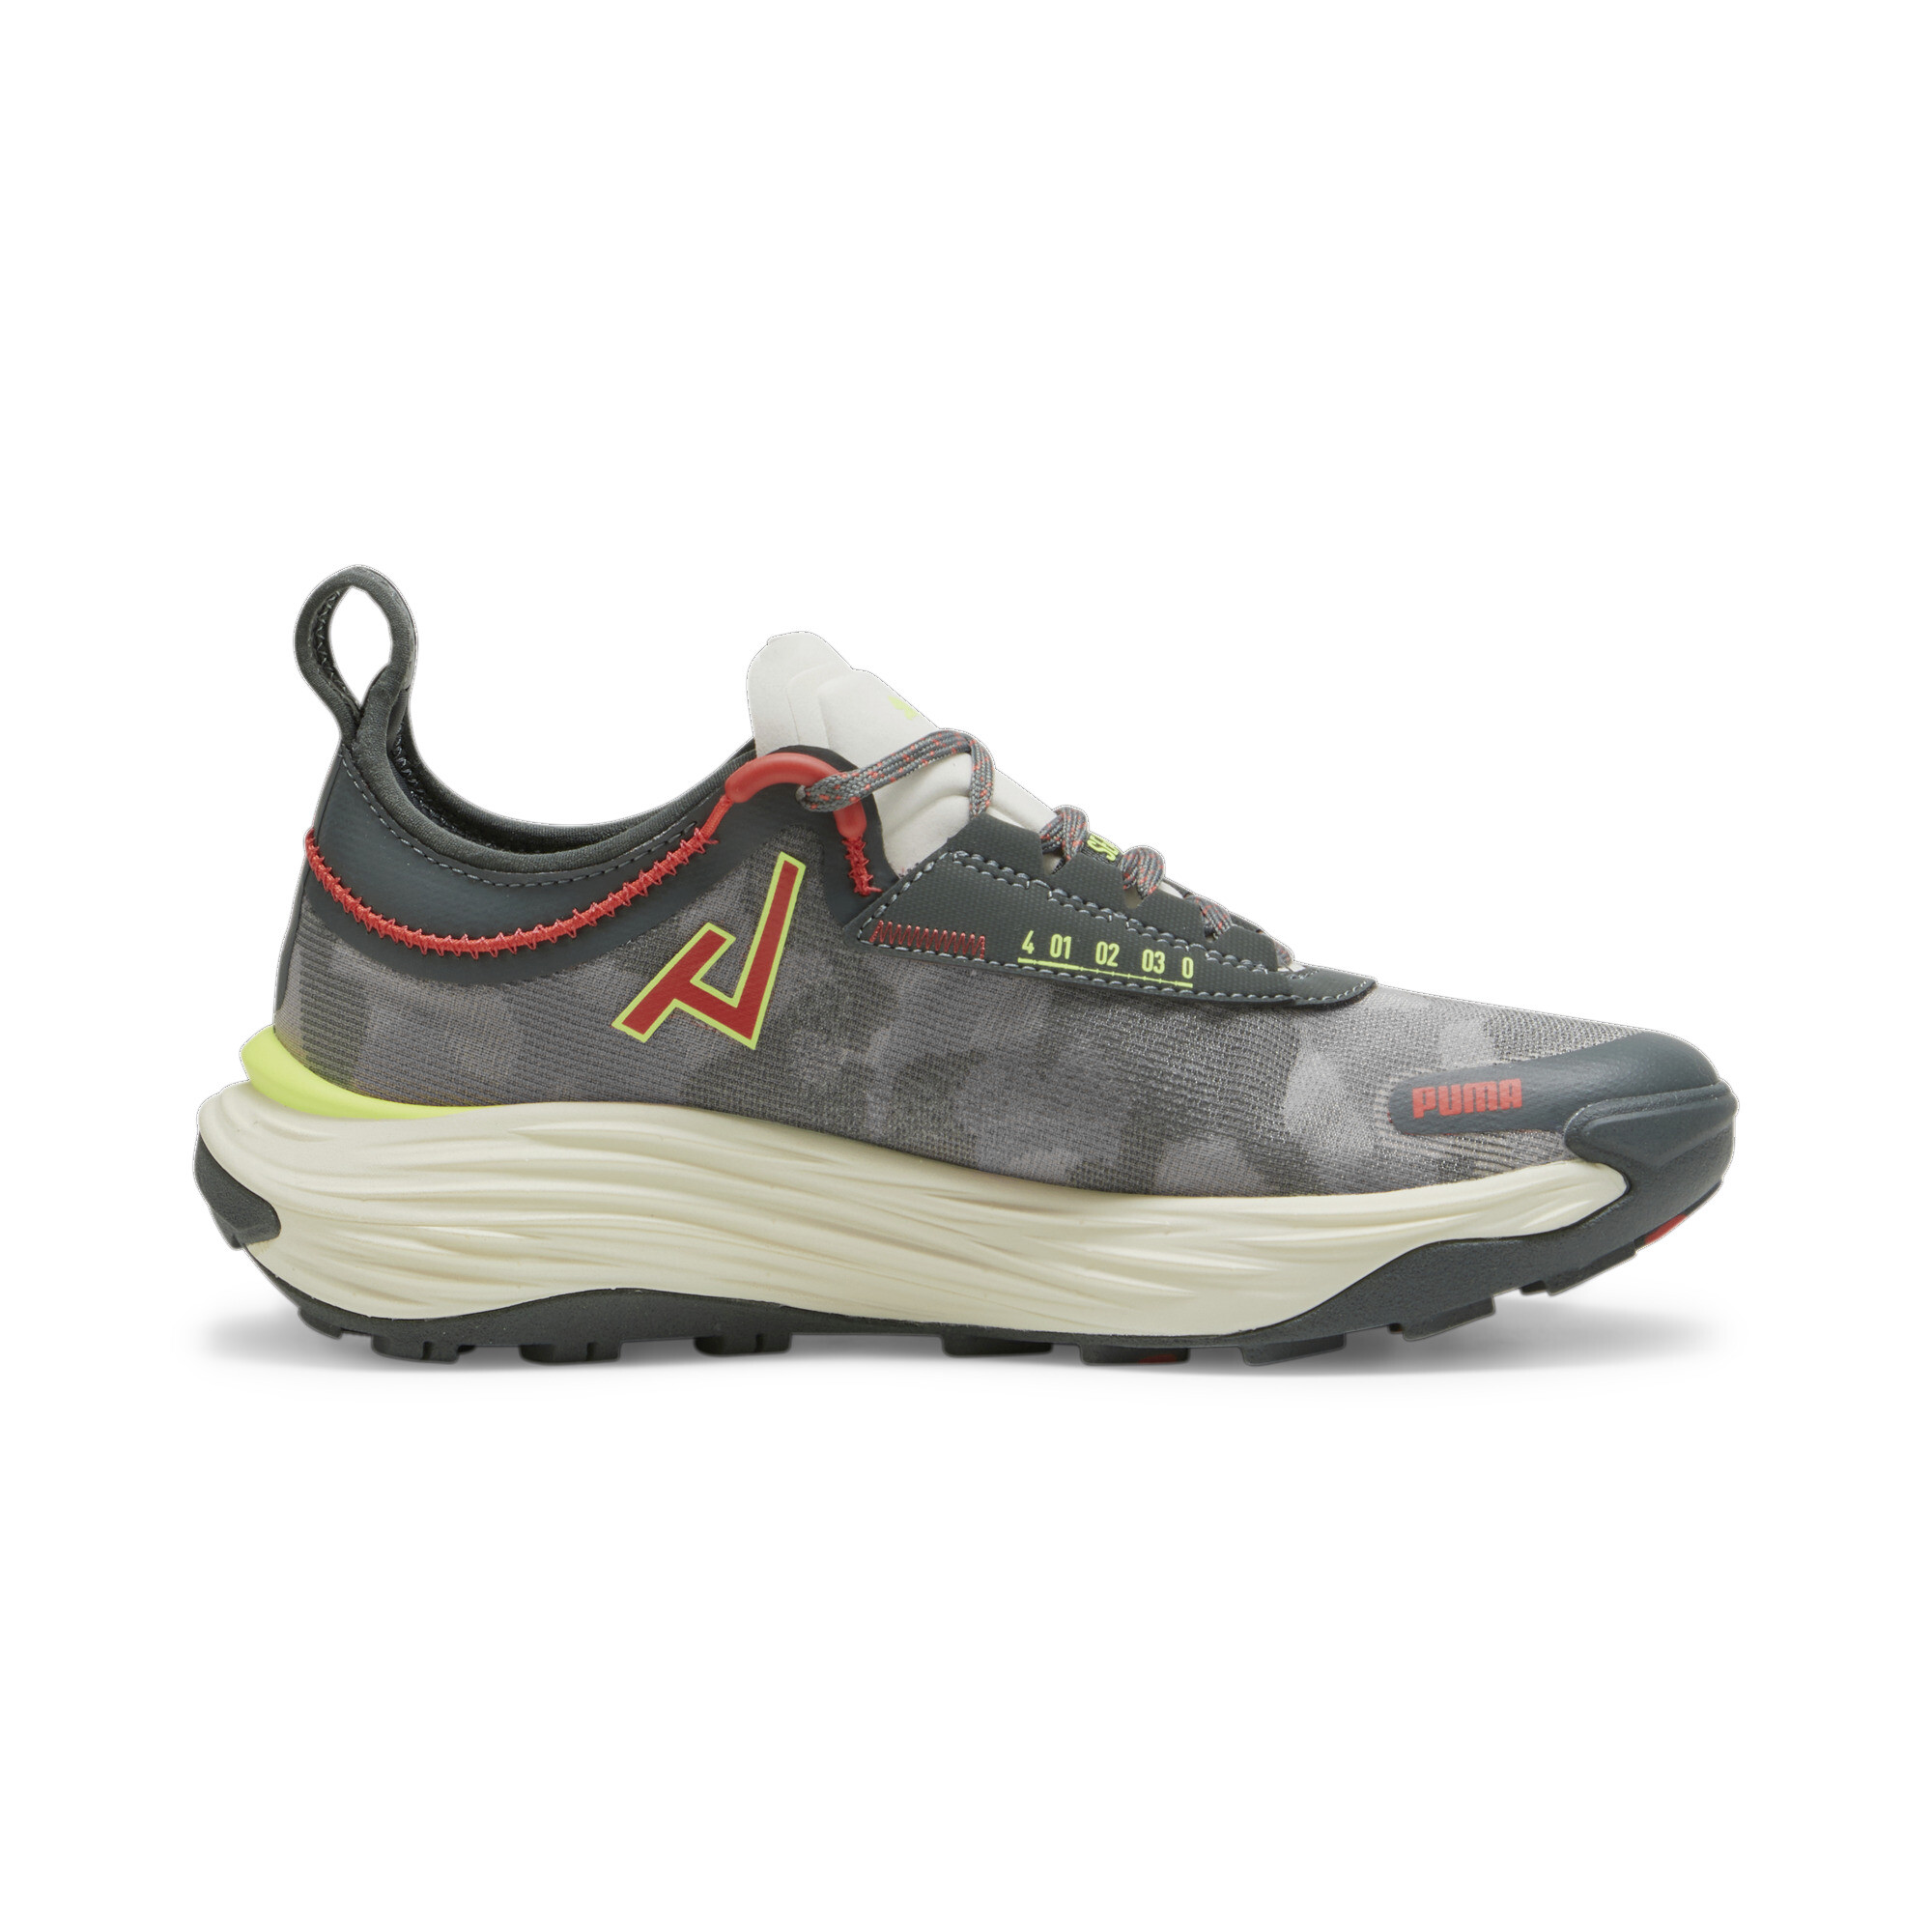 Women's PUMA Voyage NITROâ¢ 3 Trail Running Shoes In Gray, Size EU 40